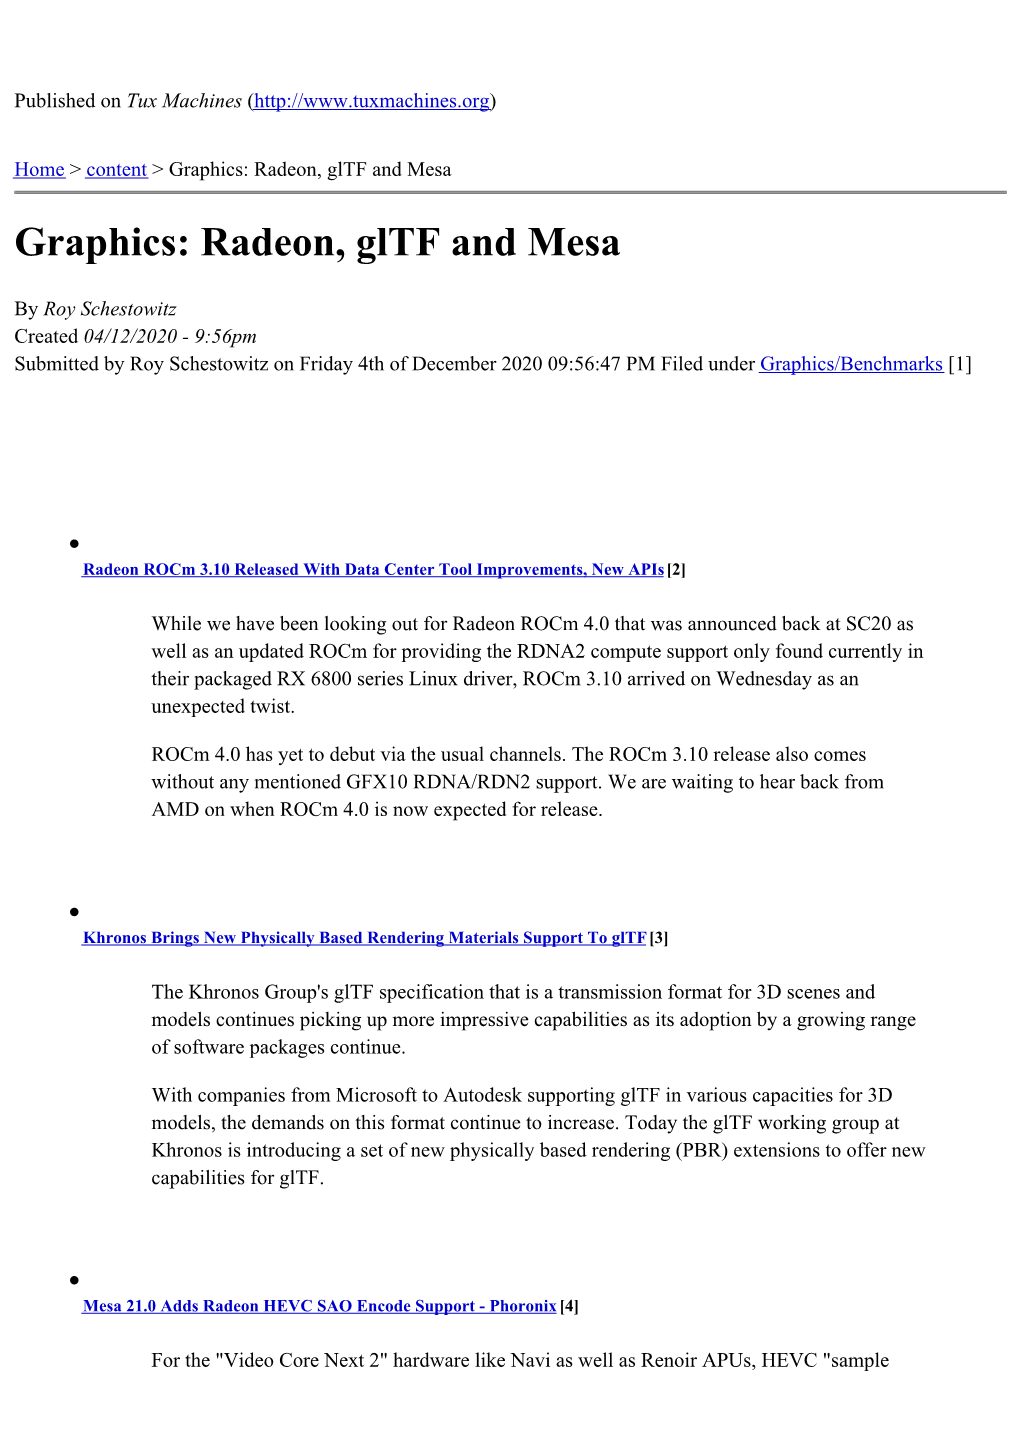 Graphics: Radeon, Gltf and Mesa